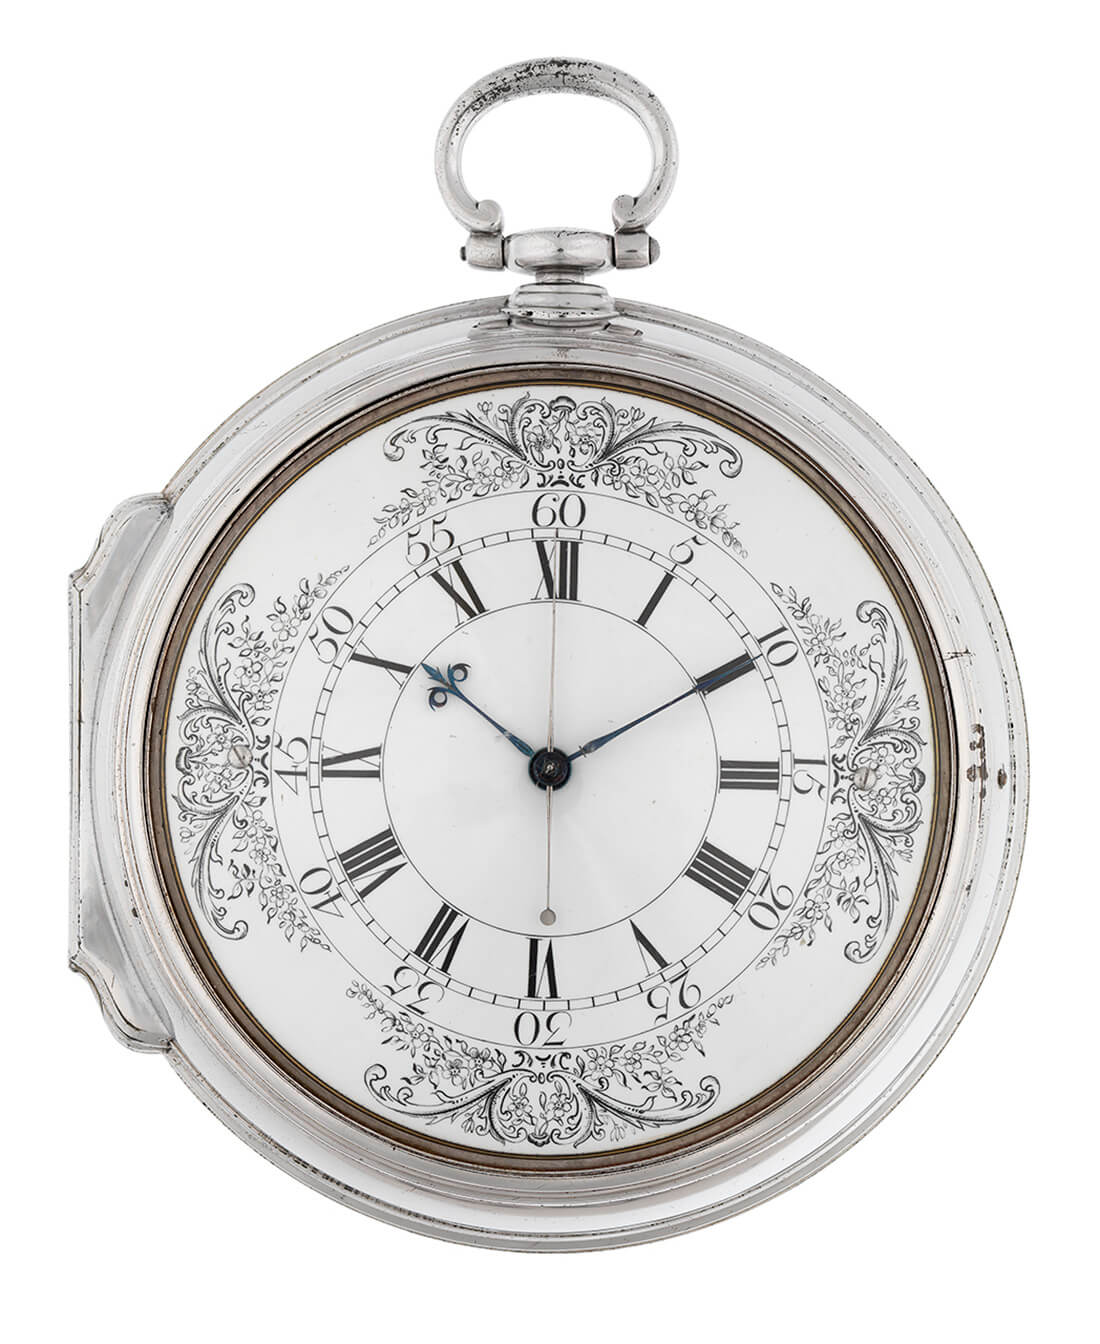 K1: Larcum Kendall's reproduction of Harrison's H4 marine chronometer